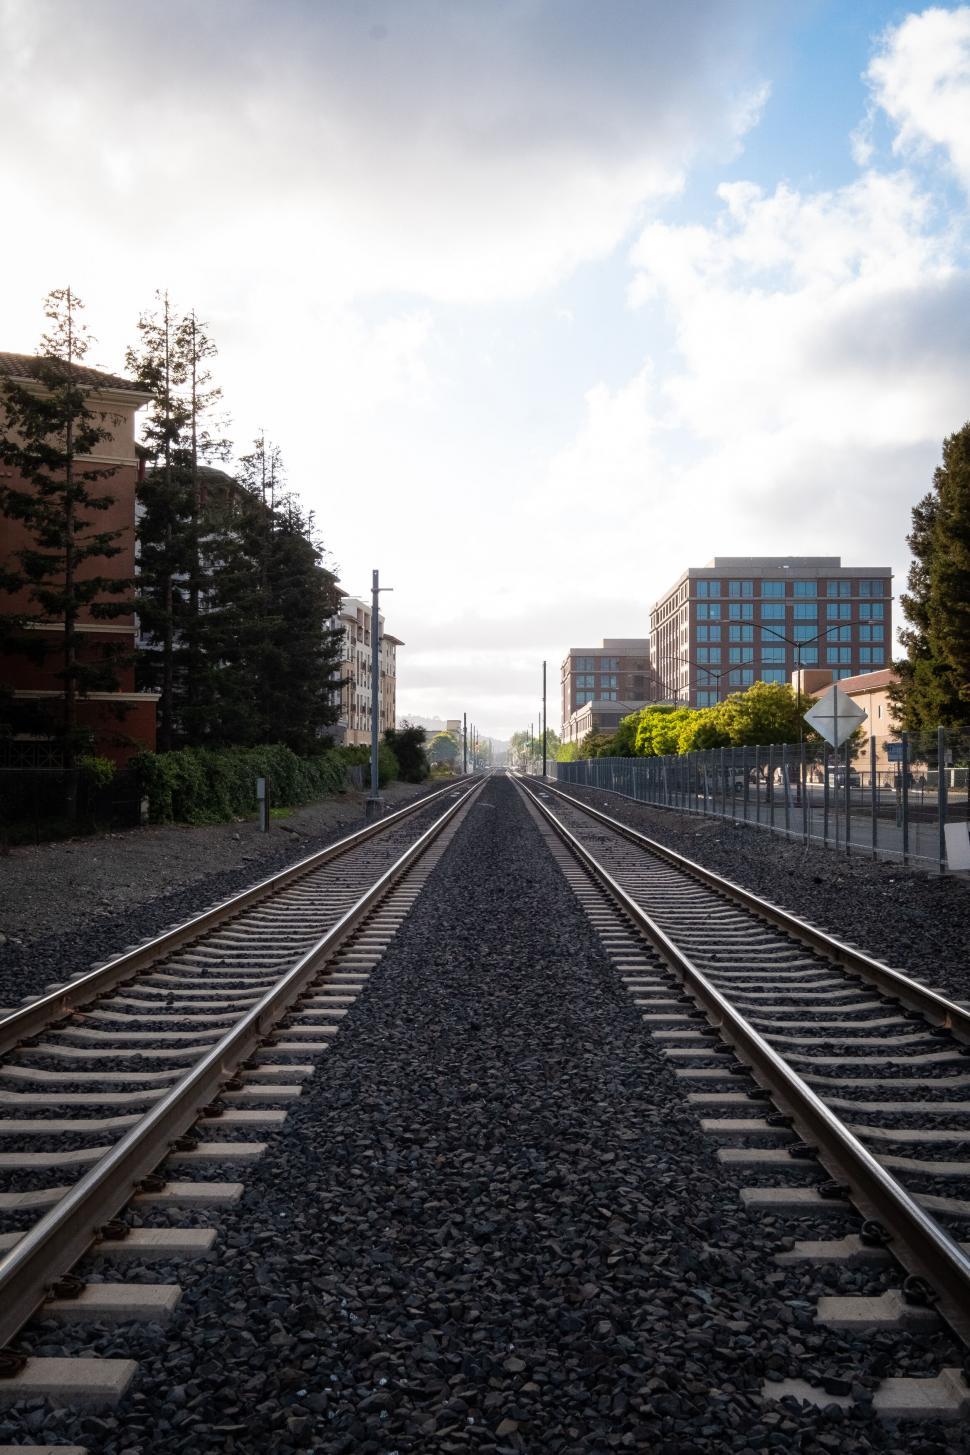 Free Image of Railroad tracks leading into urban skyline 